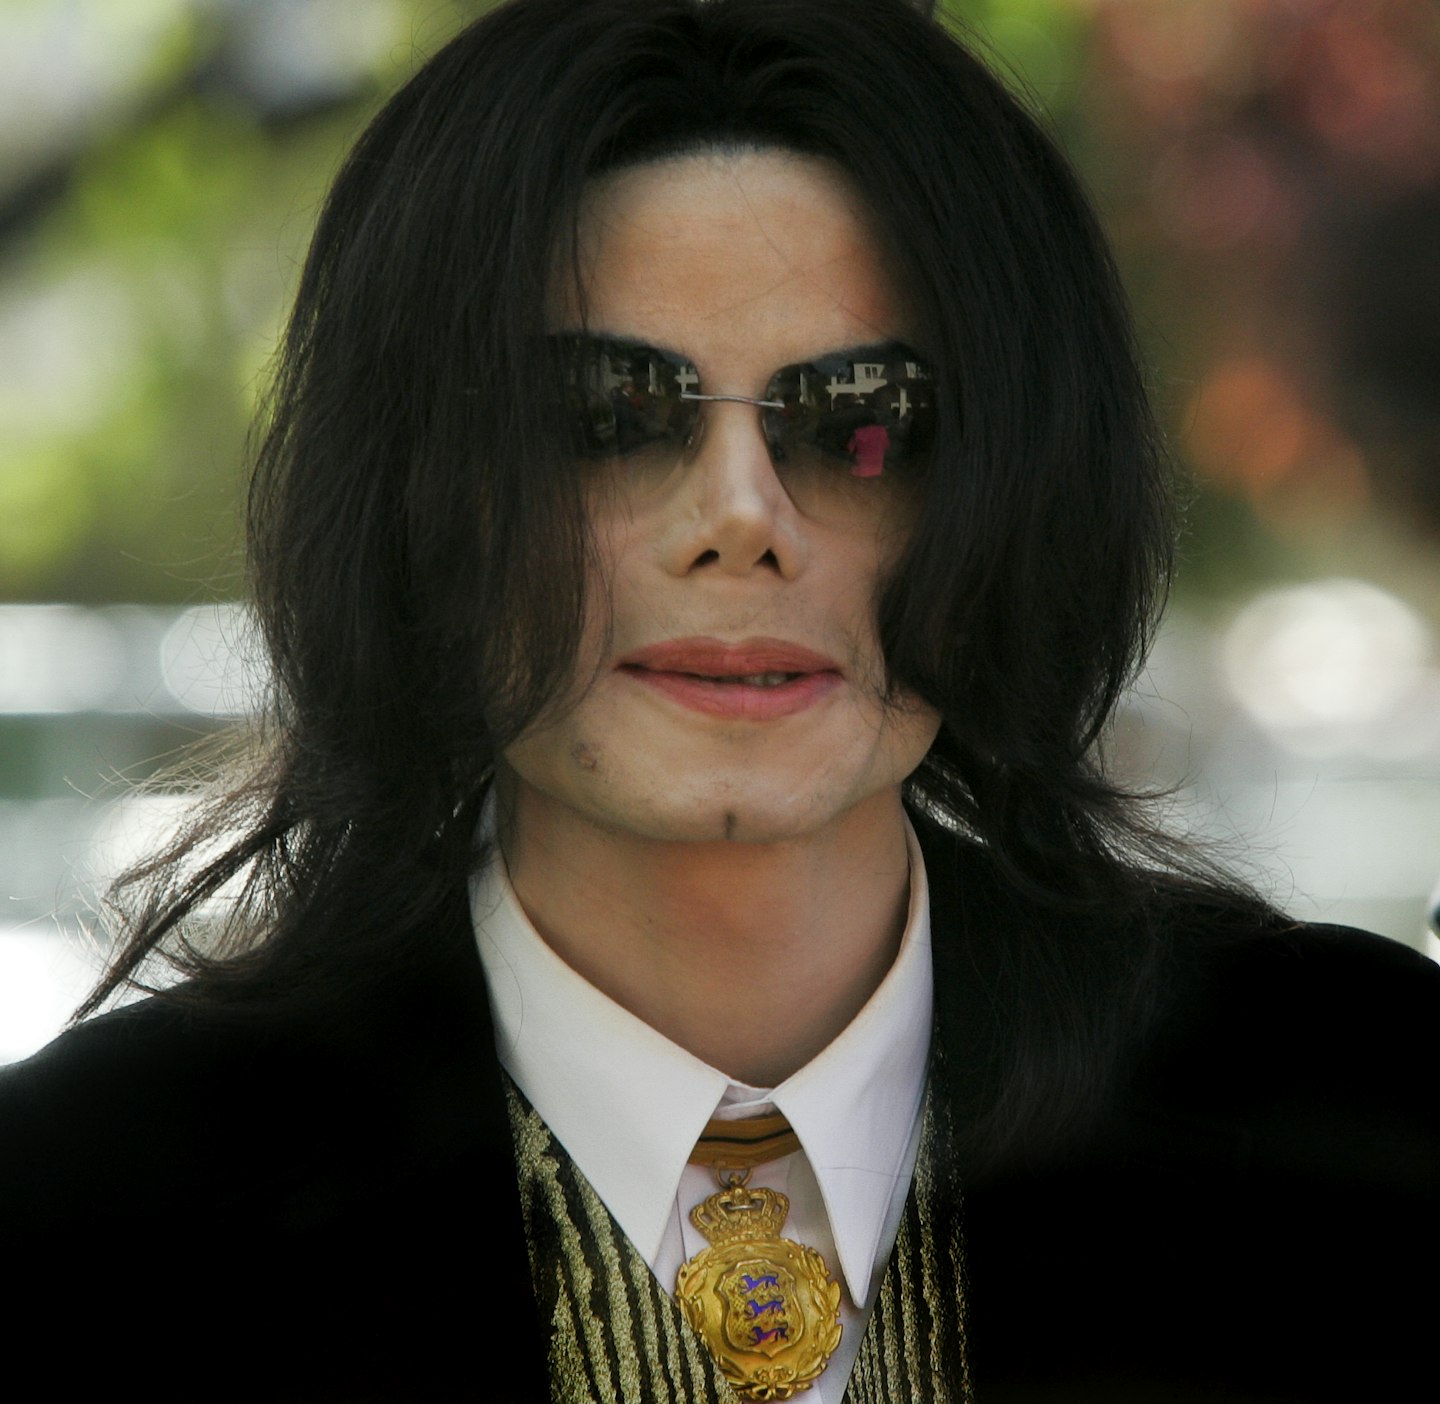 Michael Jackson leaving neverland